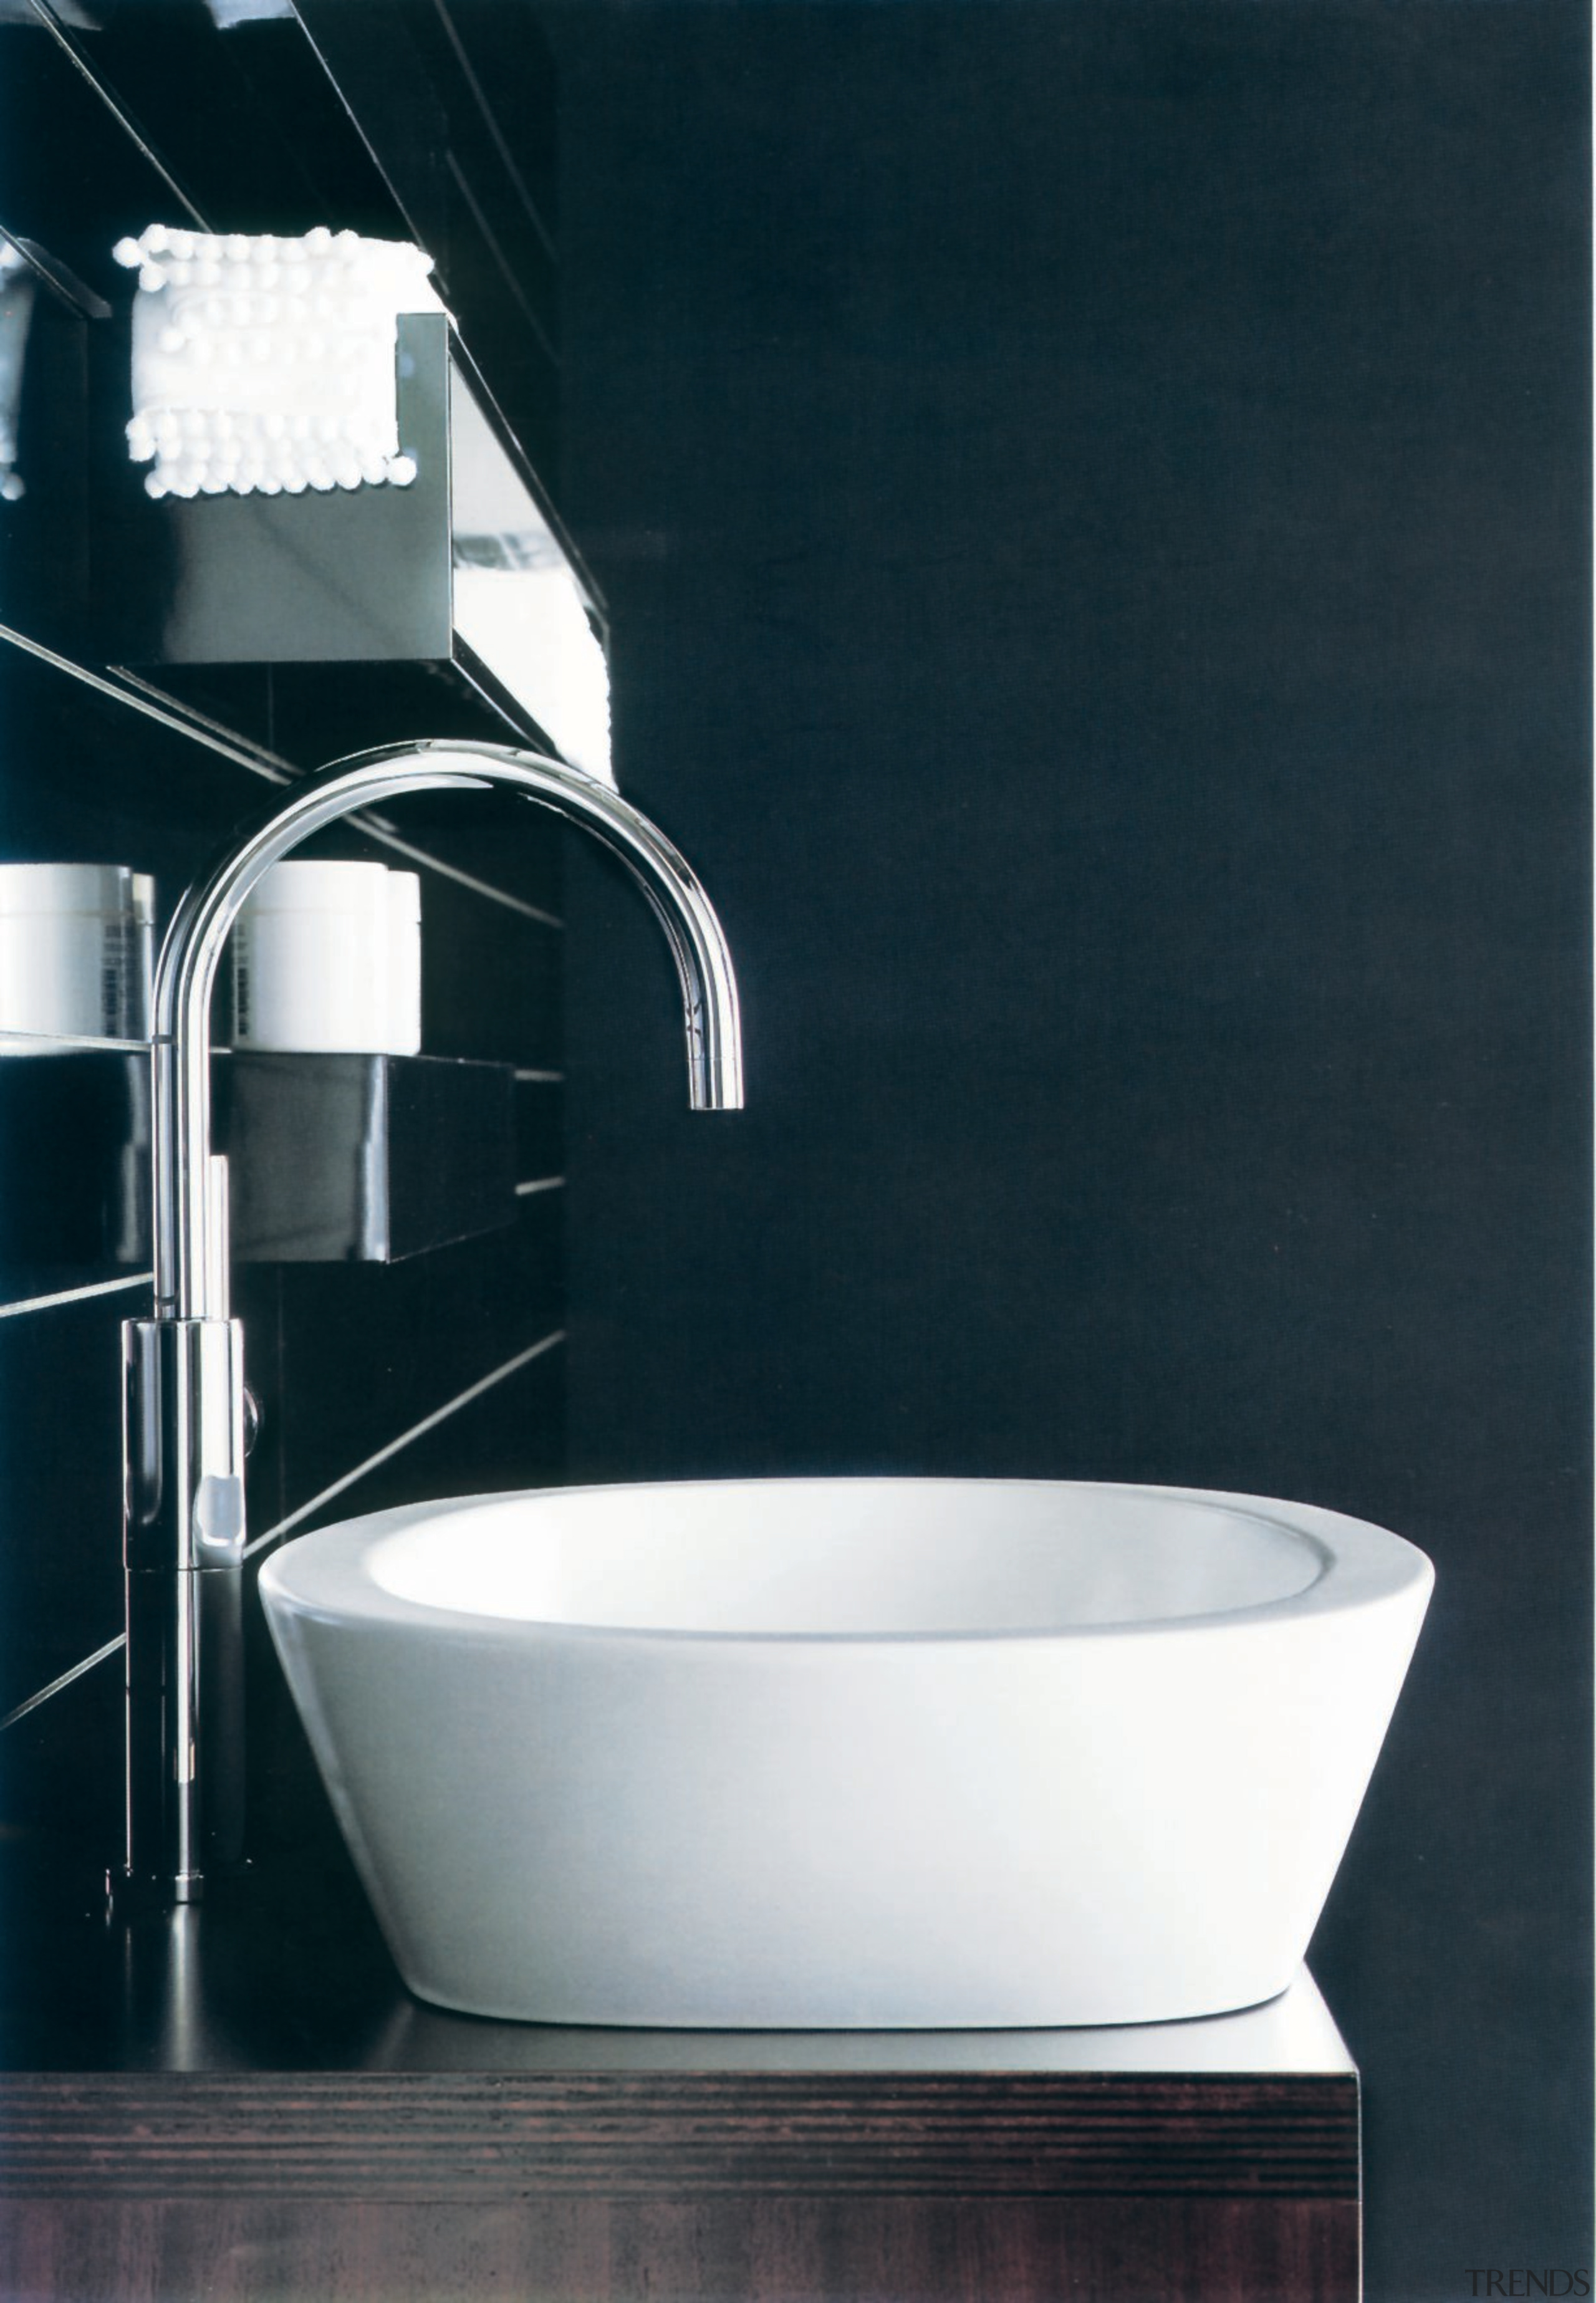 The detail of a tap and basin - bathroom, bathroom sink, bidet, ceramic, plumbing fixture, product design, sink, tap, toilet seat, black